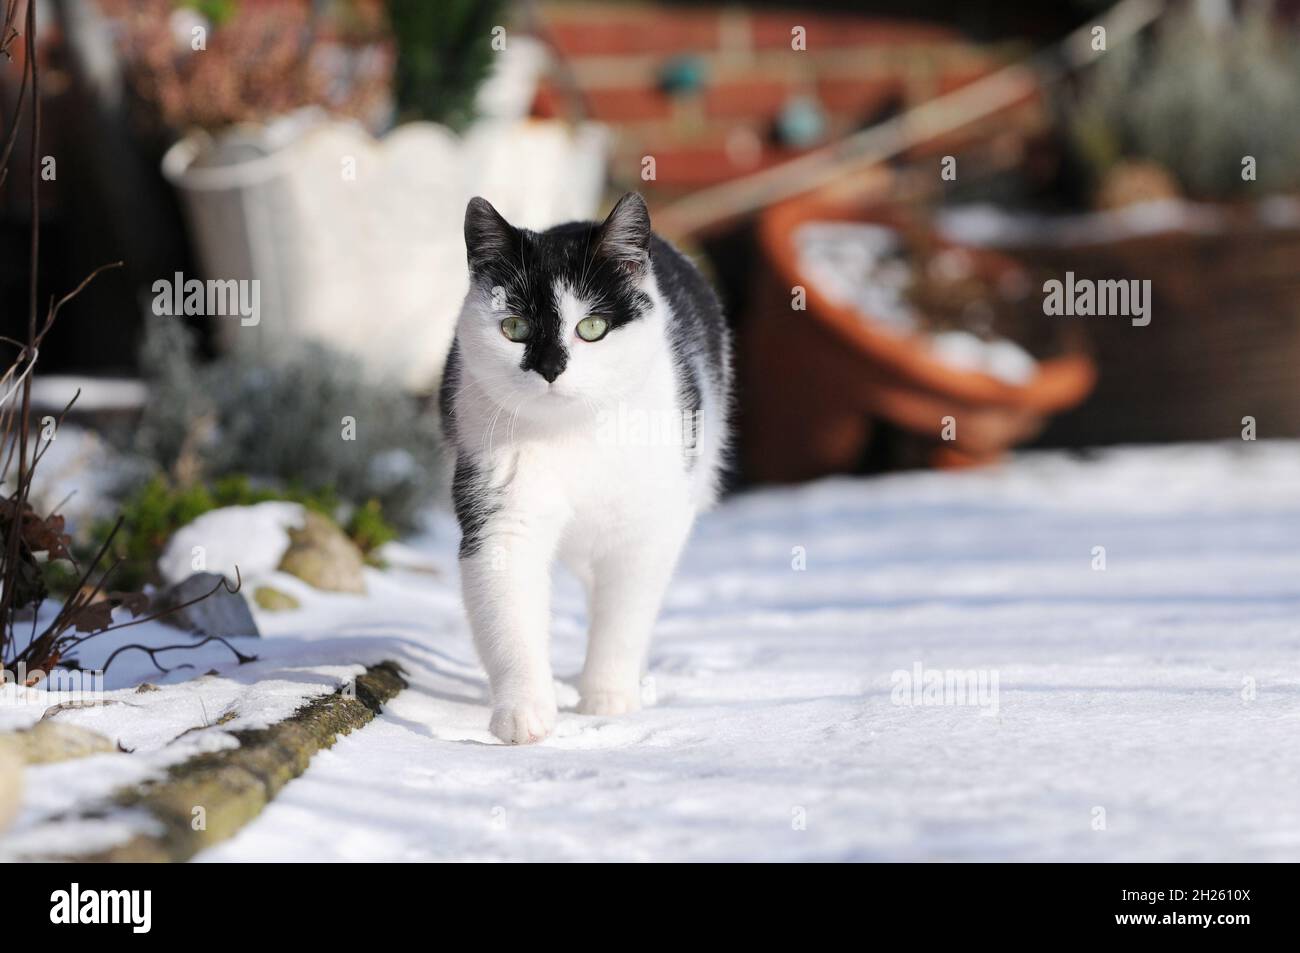 cat running in the snow Stock Photo